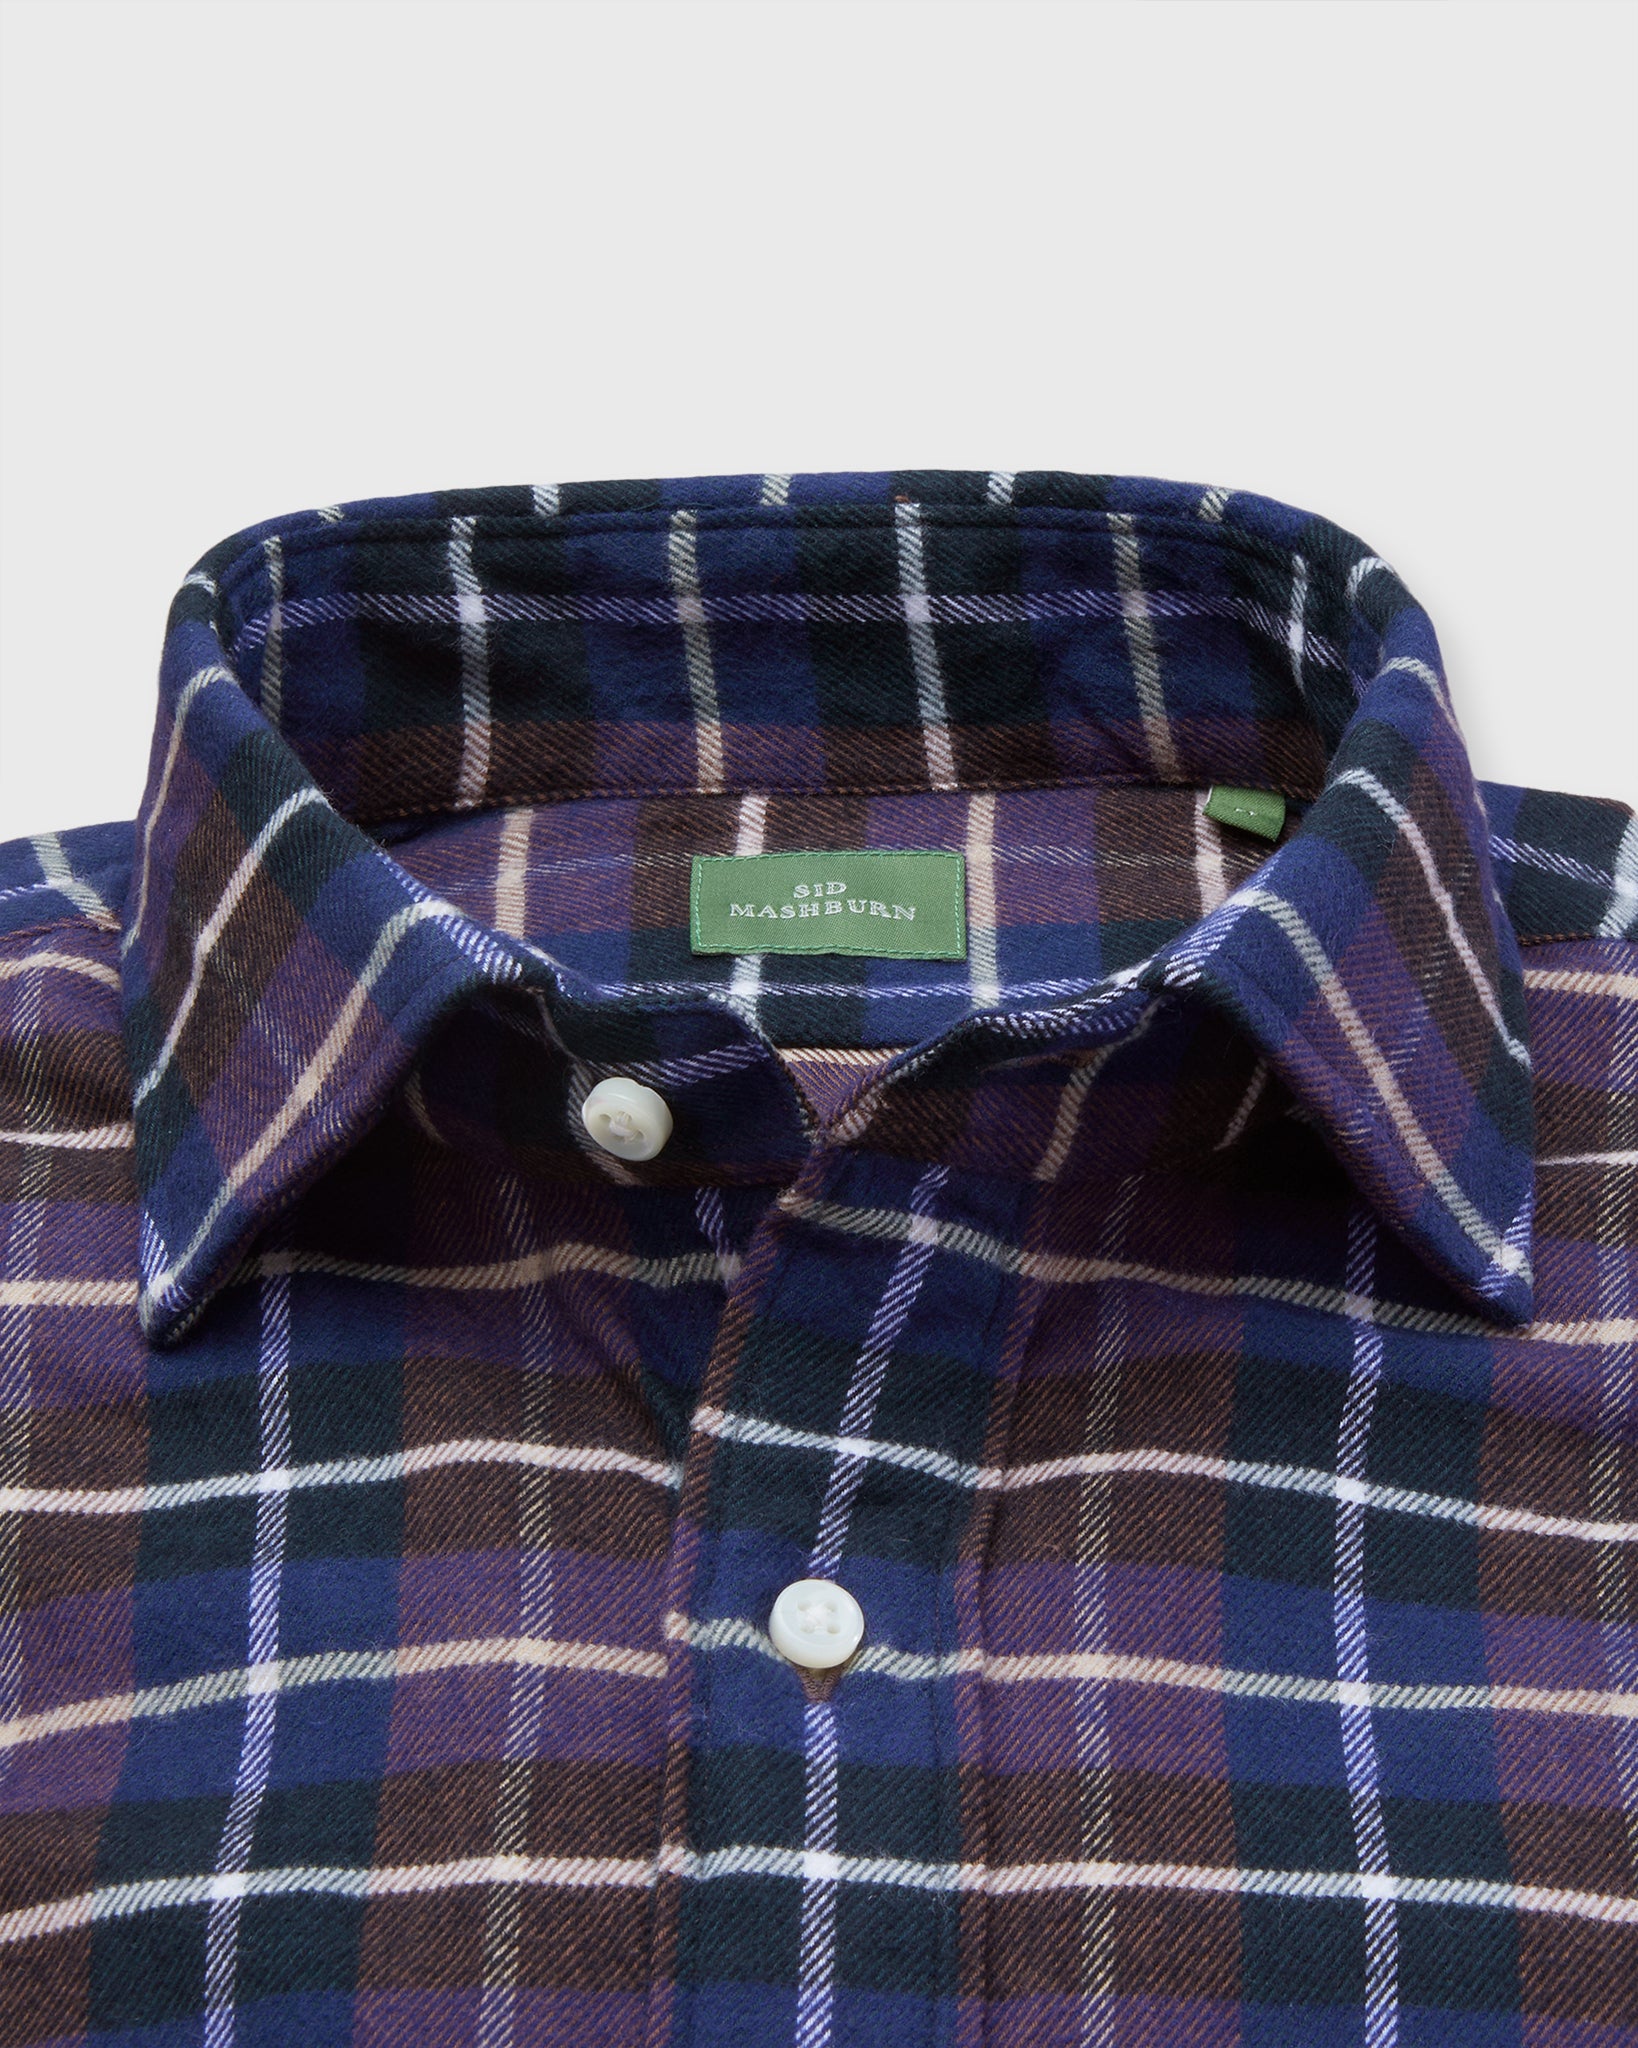 Spread Collar Sport Shirt in Brown/Lake/Bone Plaid Flannel